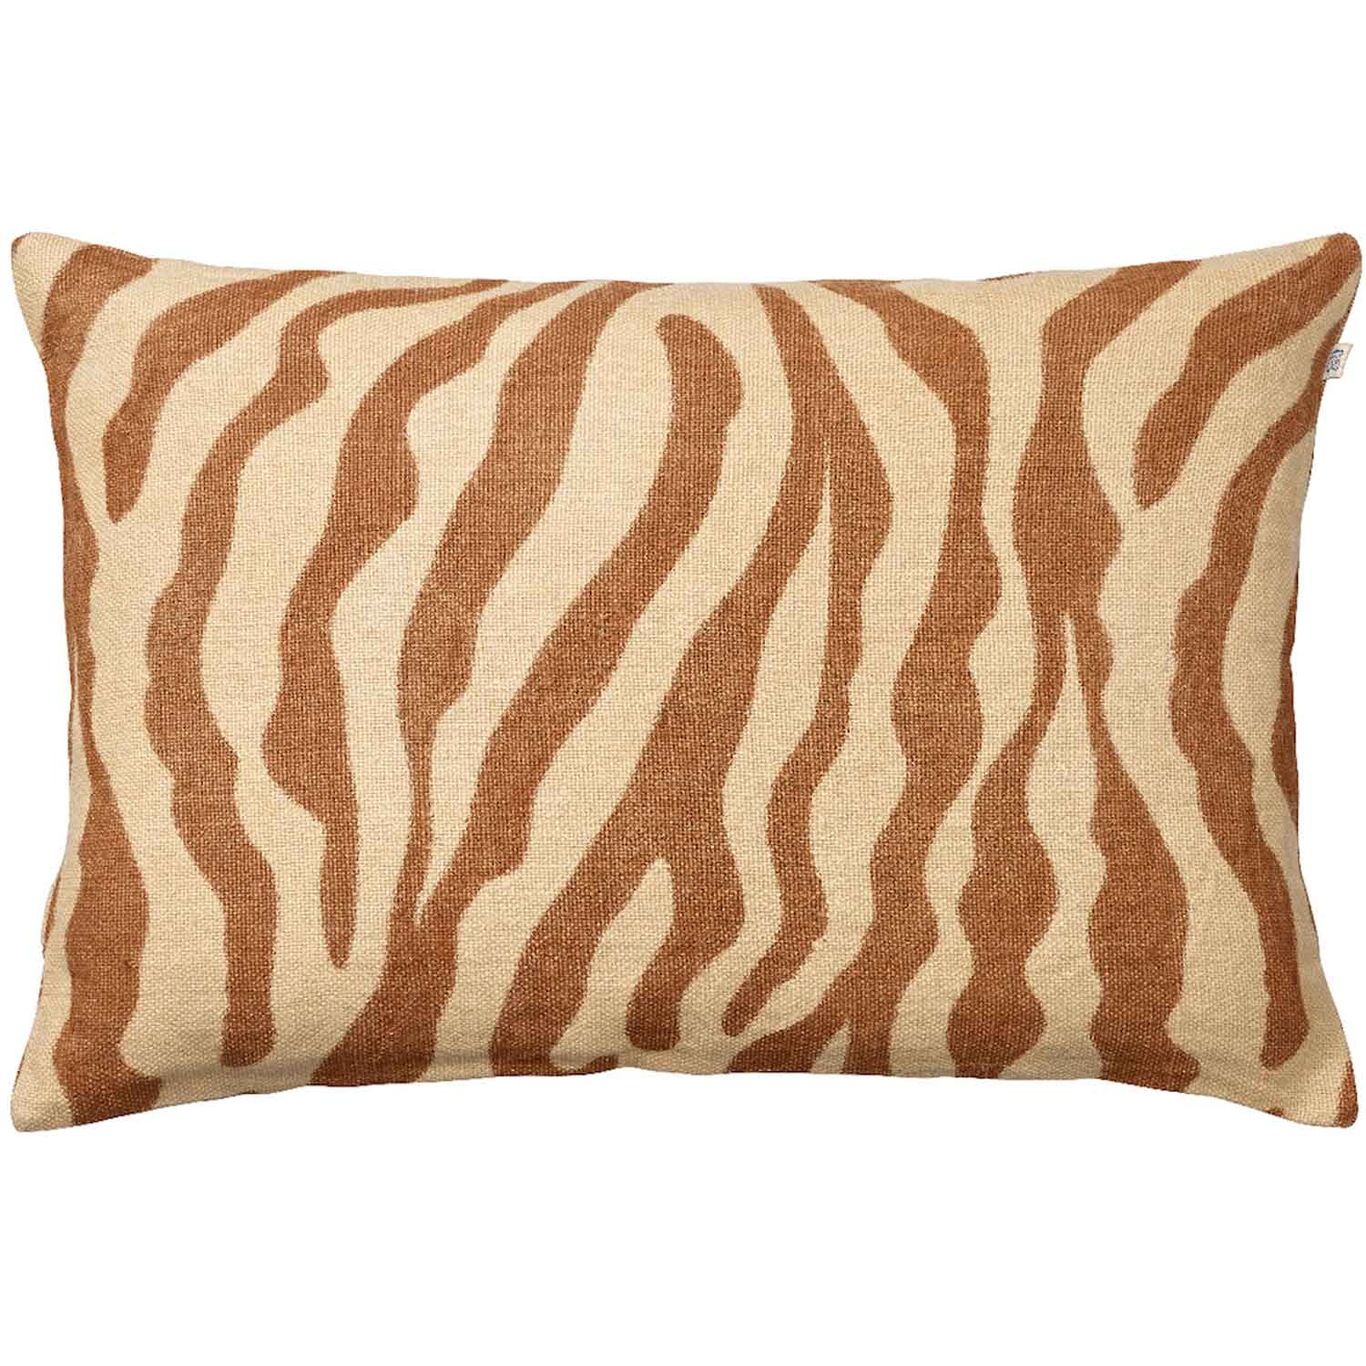 Zebra Cushion Cover 40x60 cm, Taupe